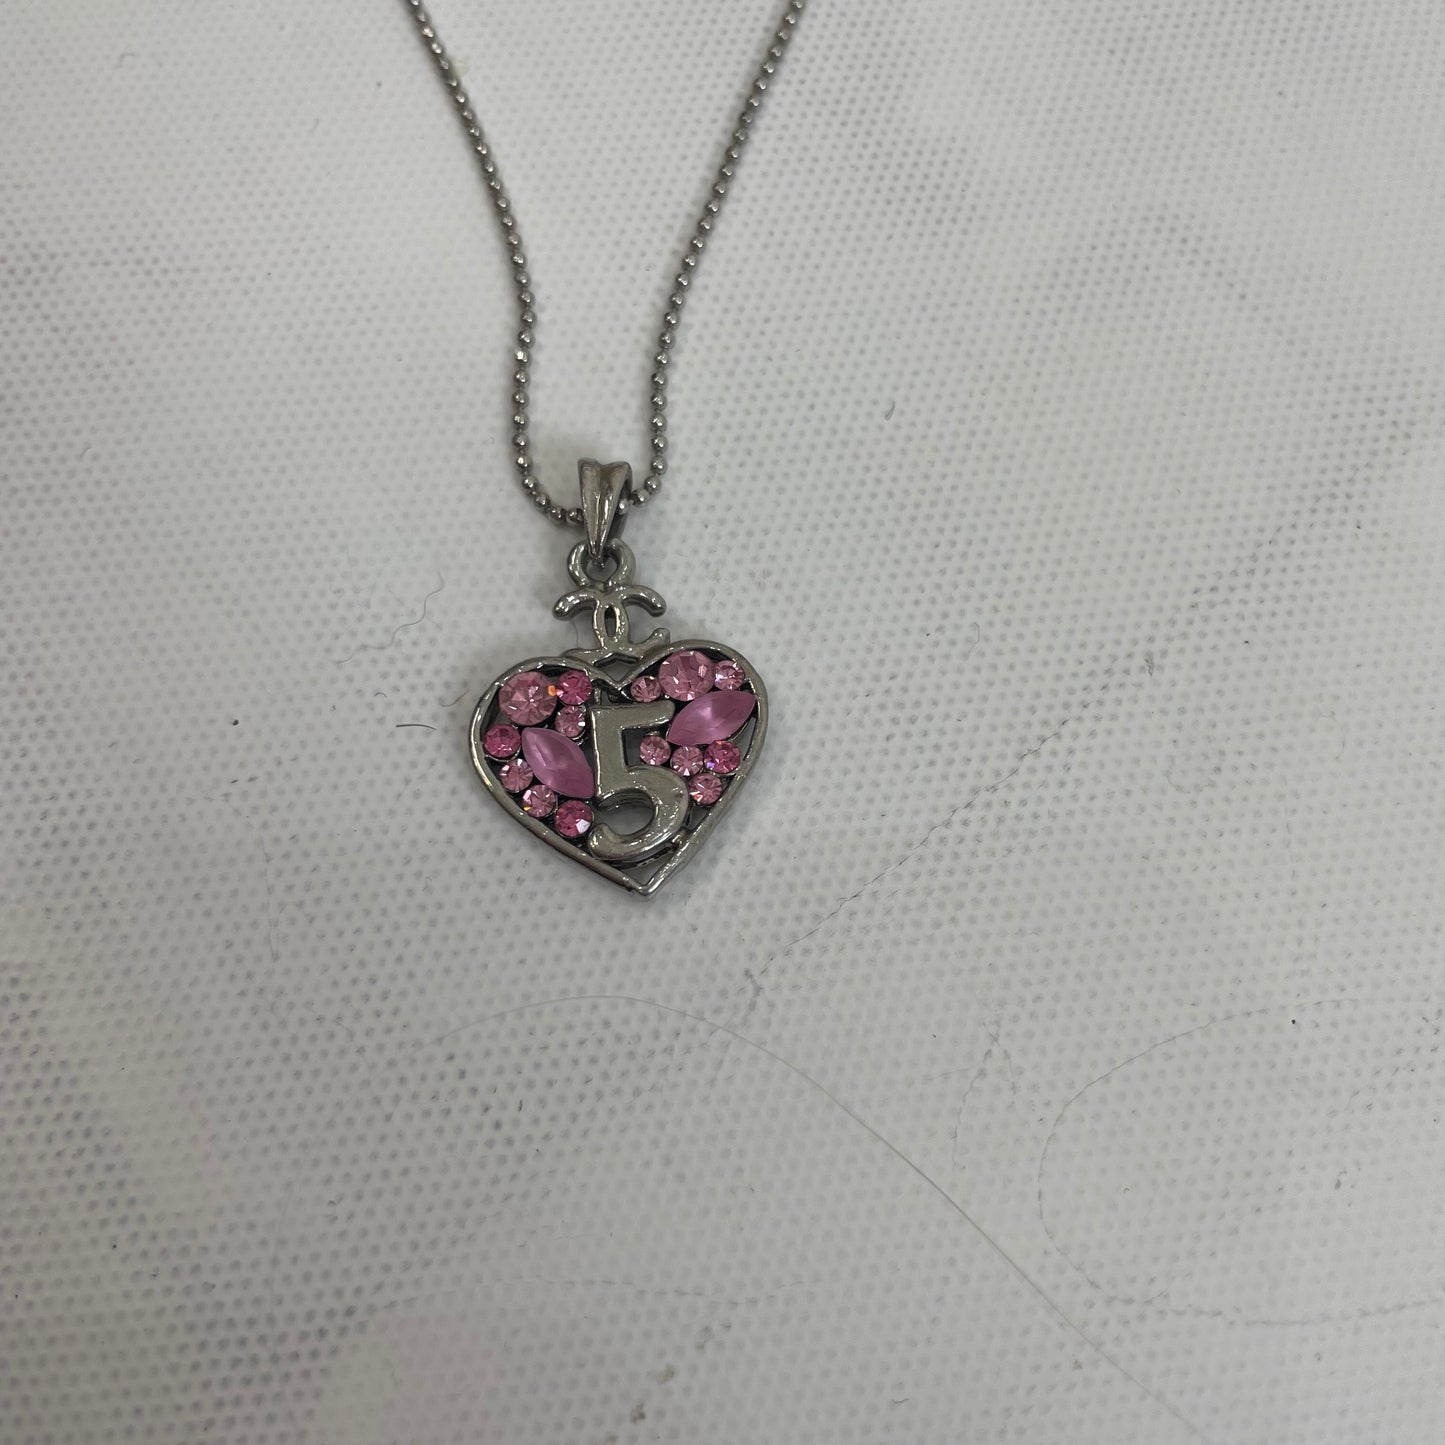 INSTA BADDIE DROP | silver heart pendant necklace with diamanté “5”